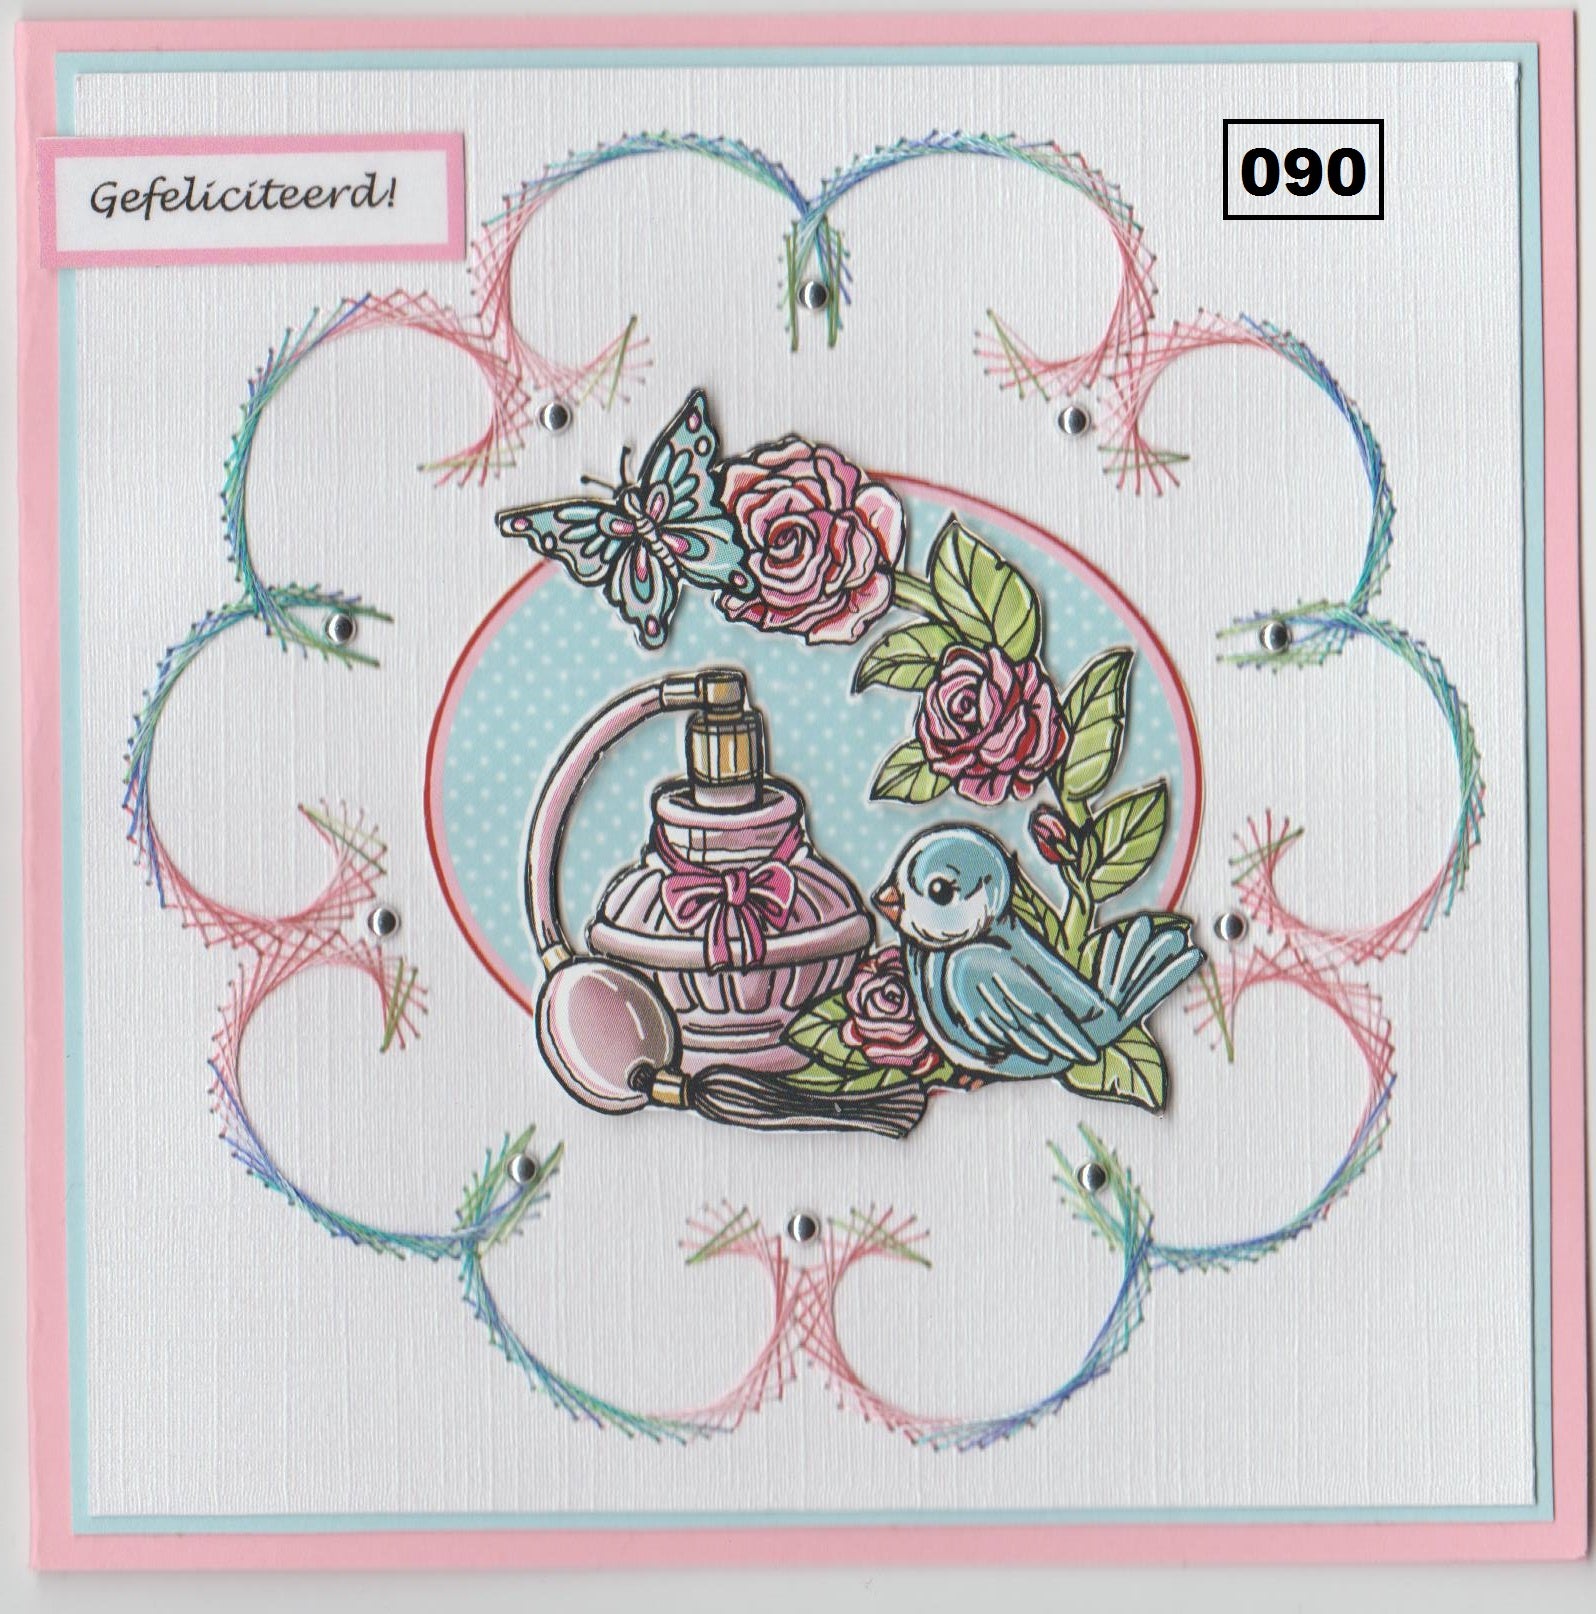 Laura's Design Digital Embroidery Pattern - Flourish Wreath 2